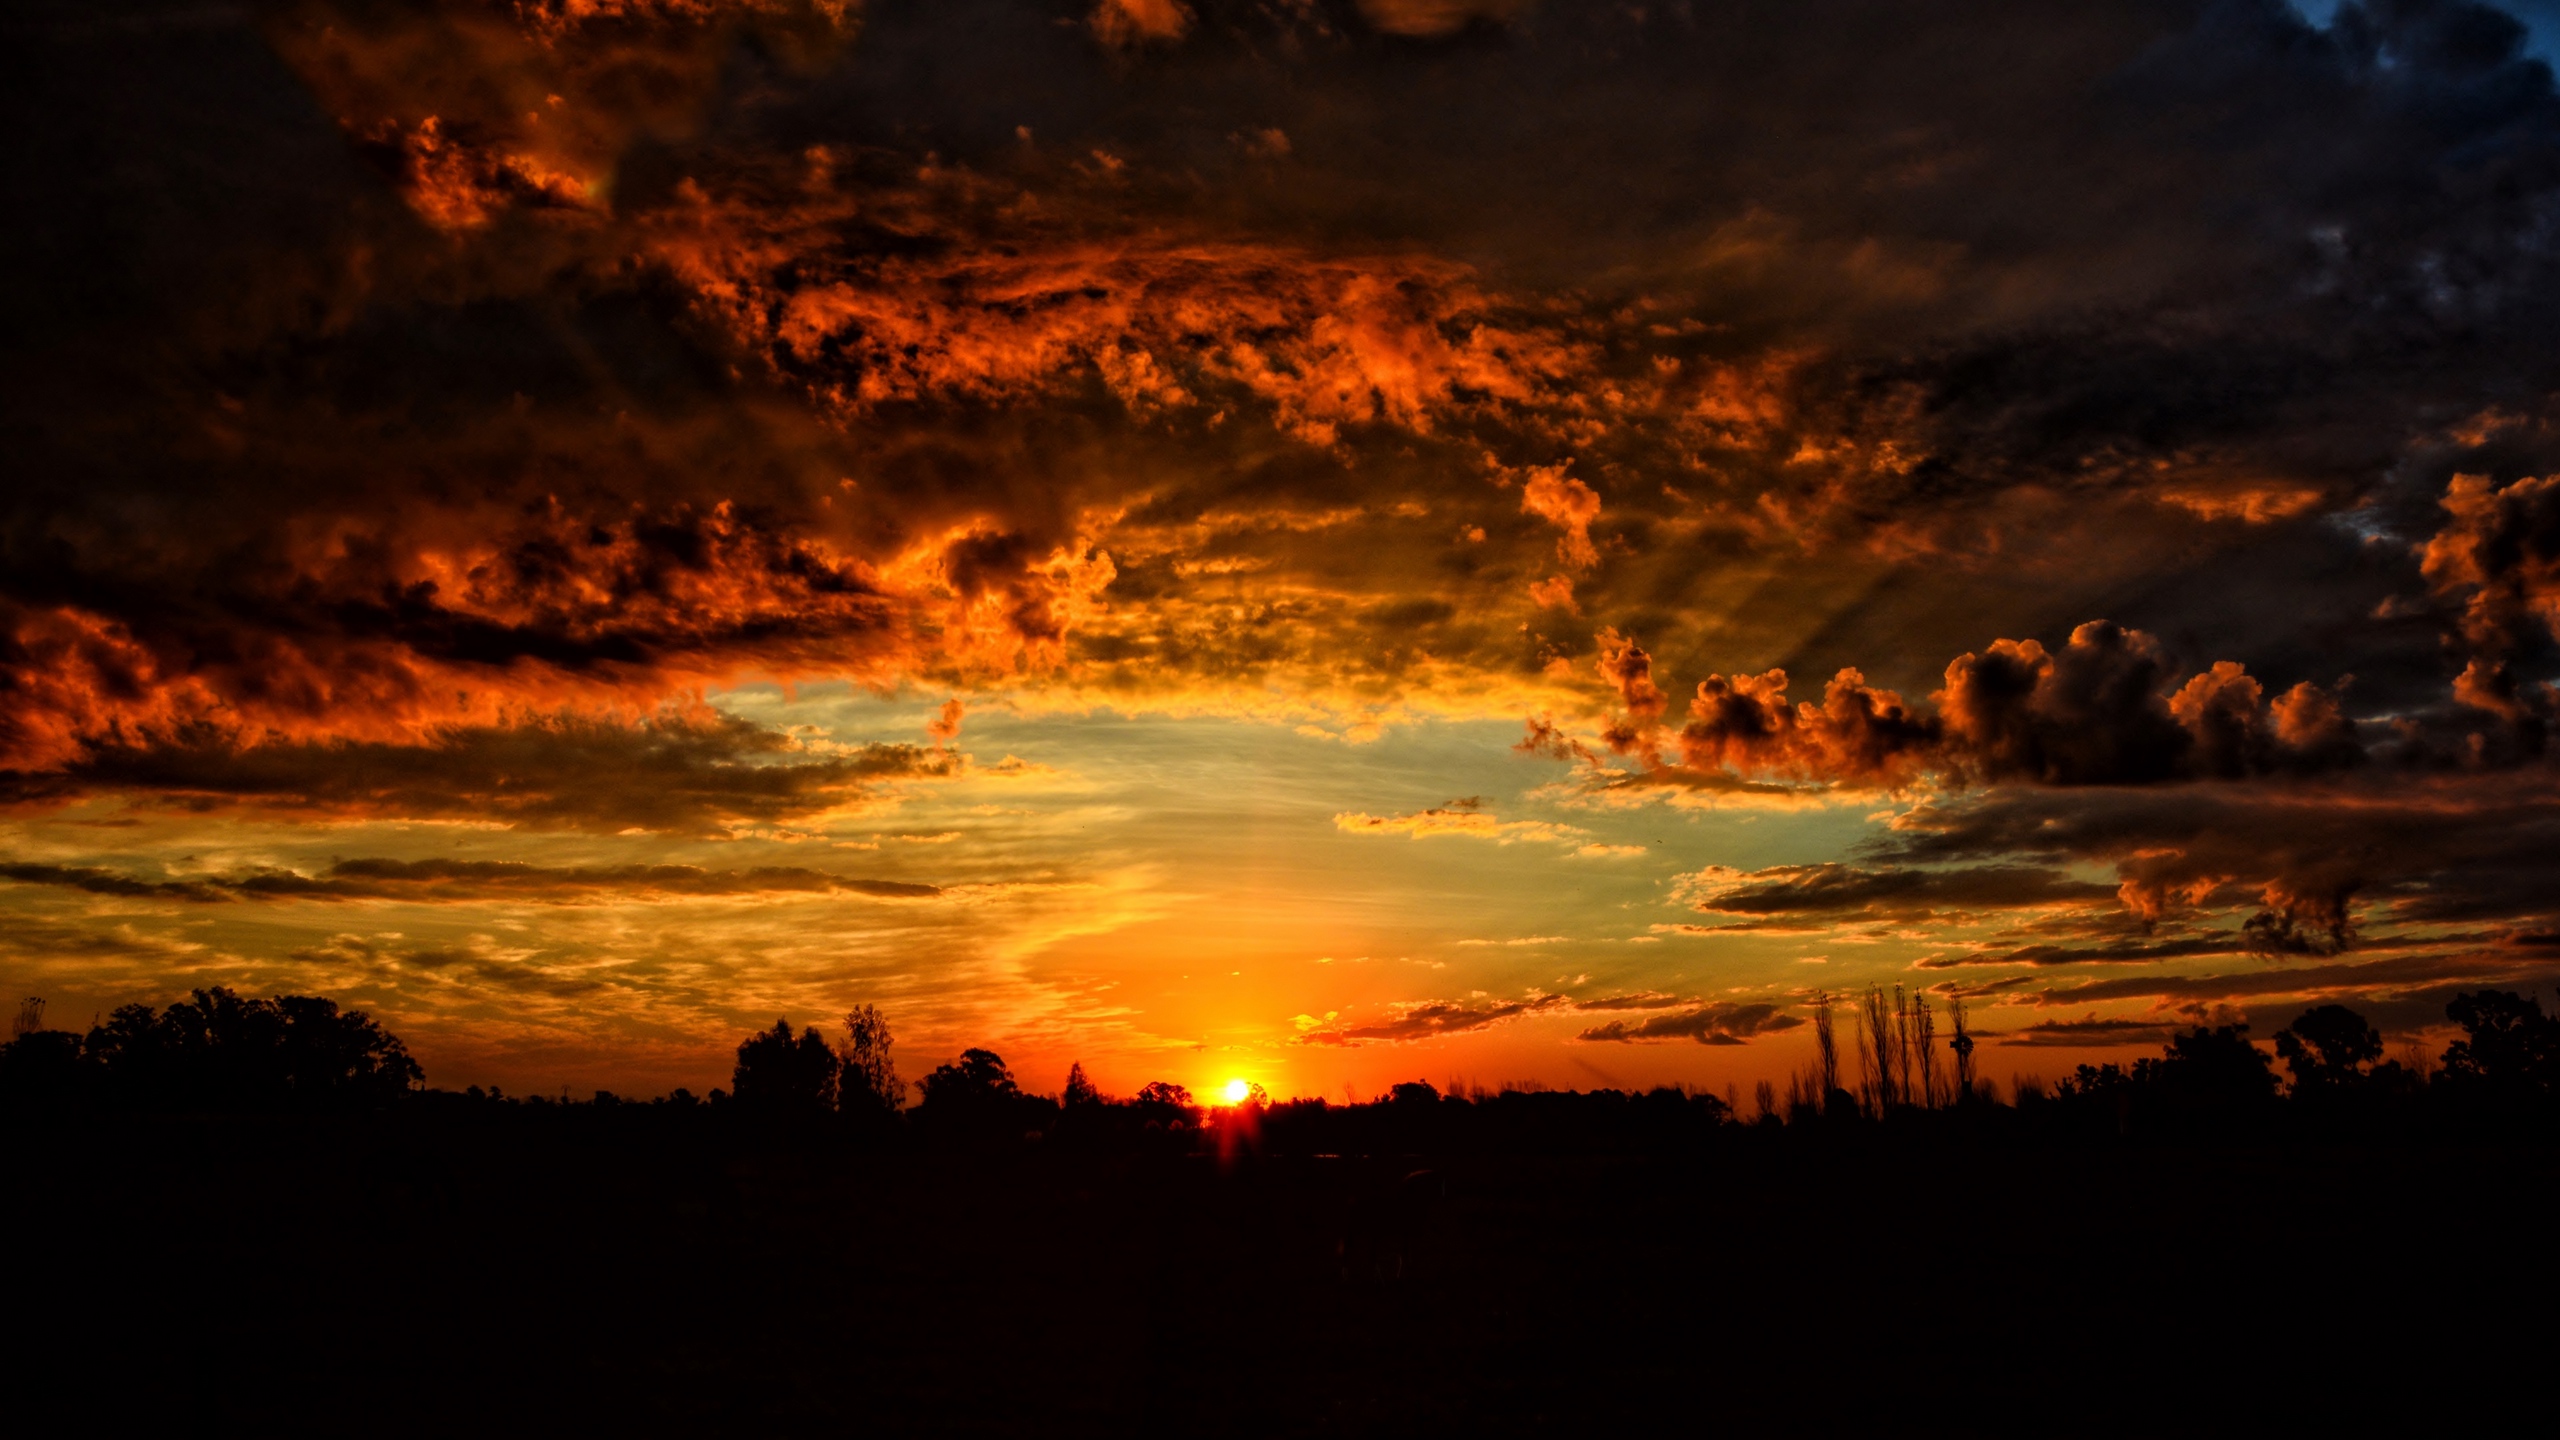 Download wallpaper 2560x1440 sunset, clouds, orange sky widescreen ...